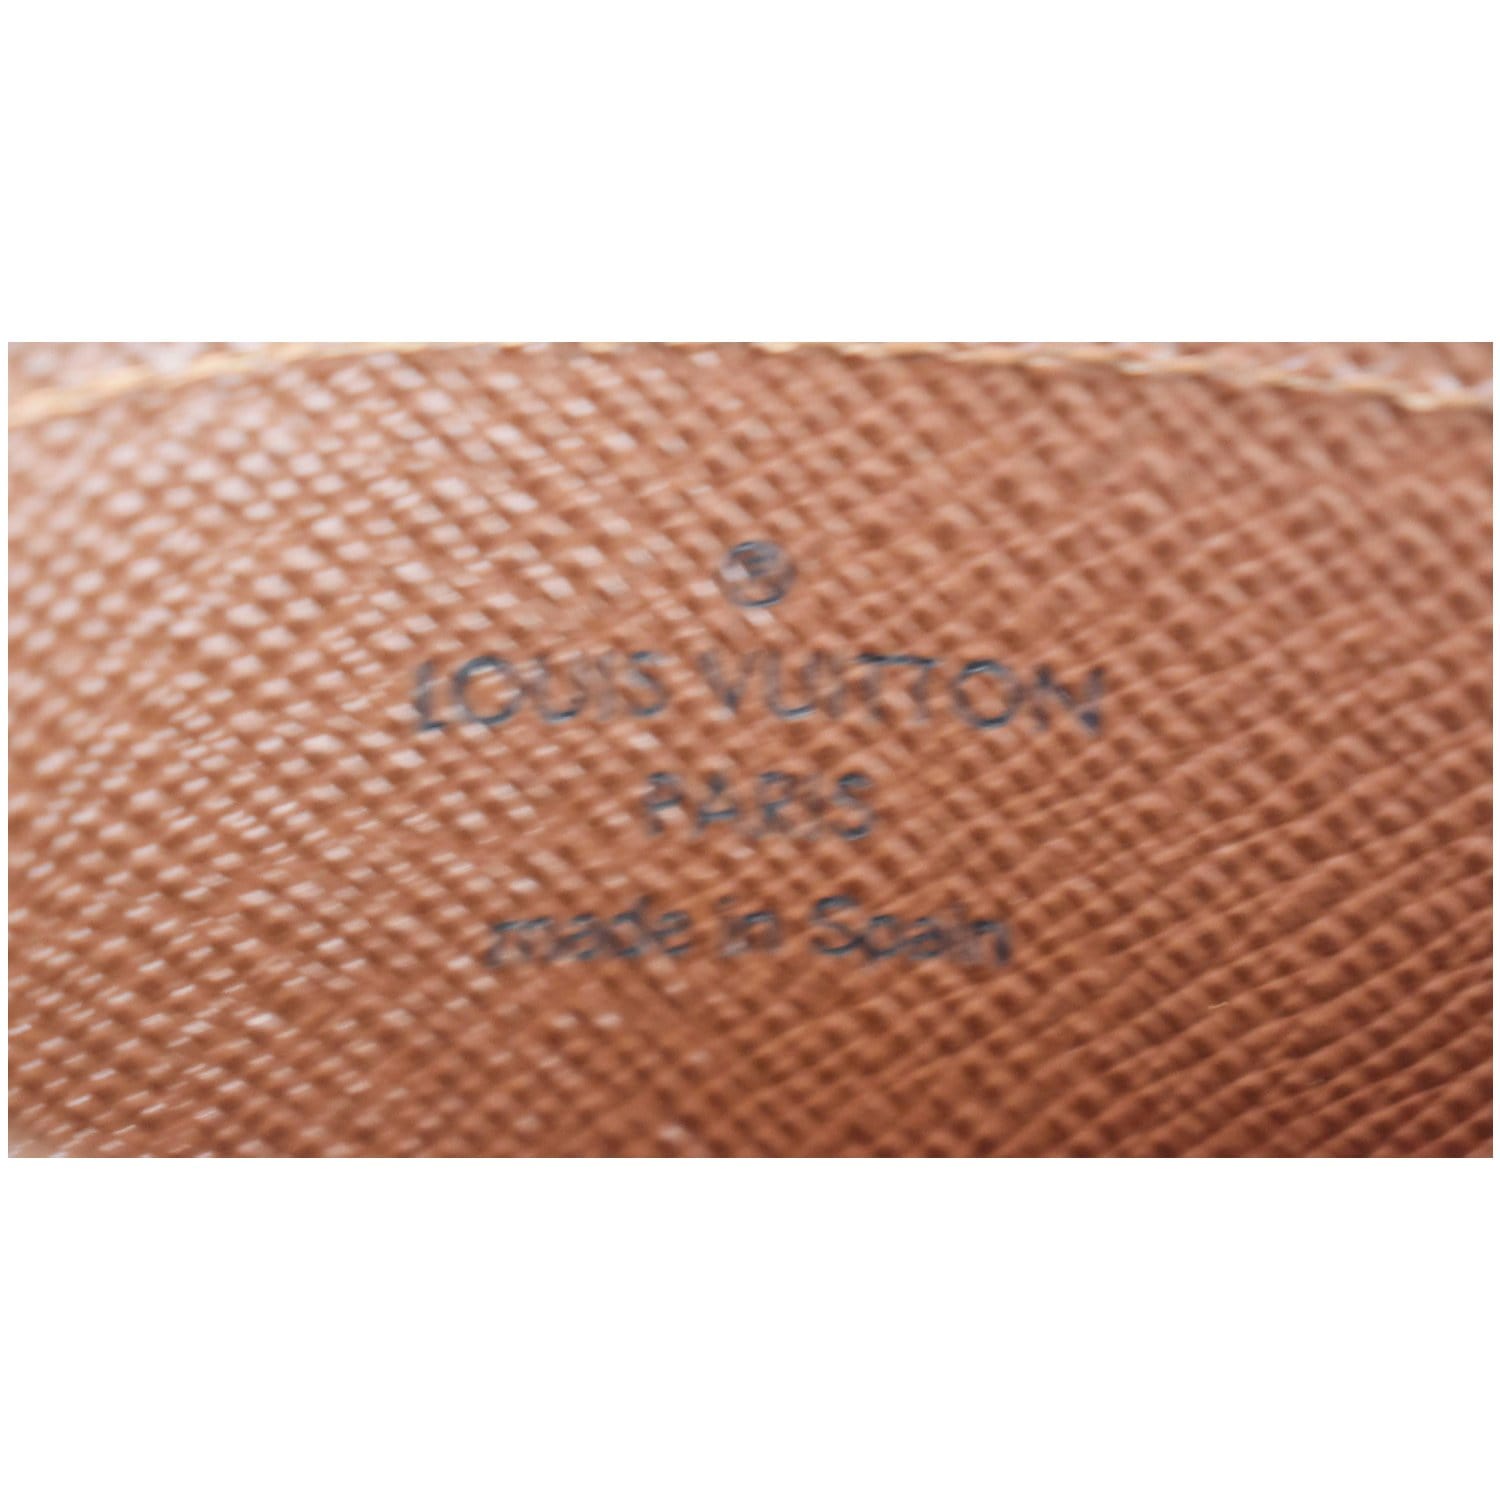 Louis Vuitton Gusseted Card Holder Monogram Canvas Brown 2153801